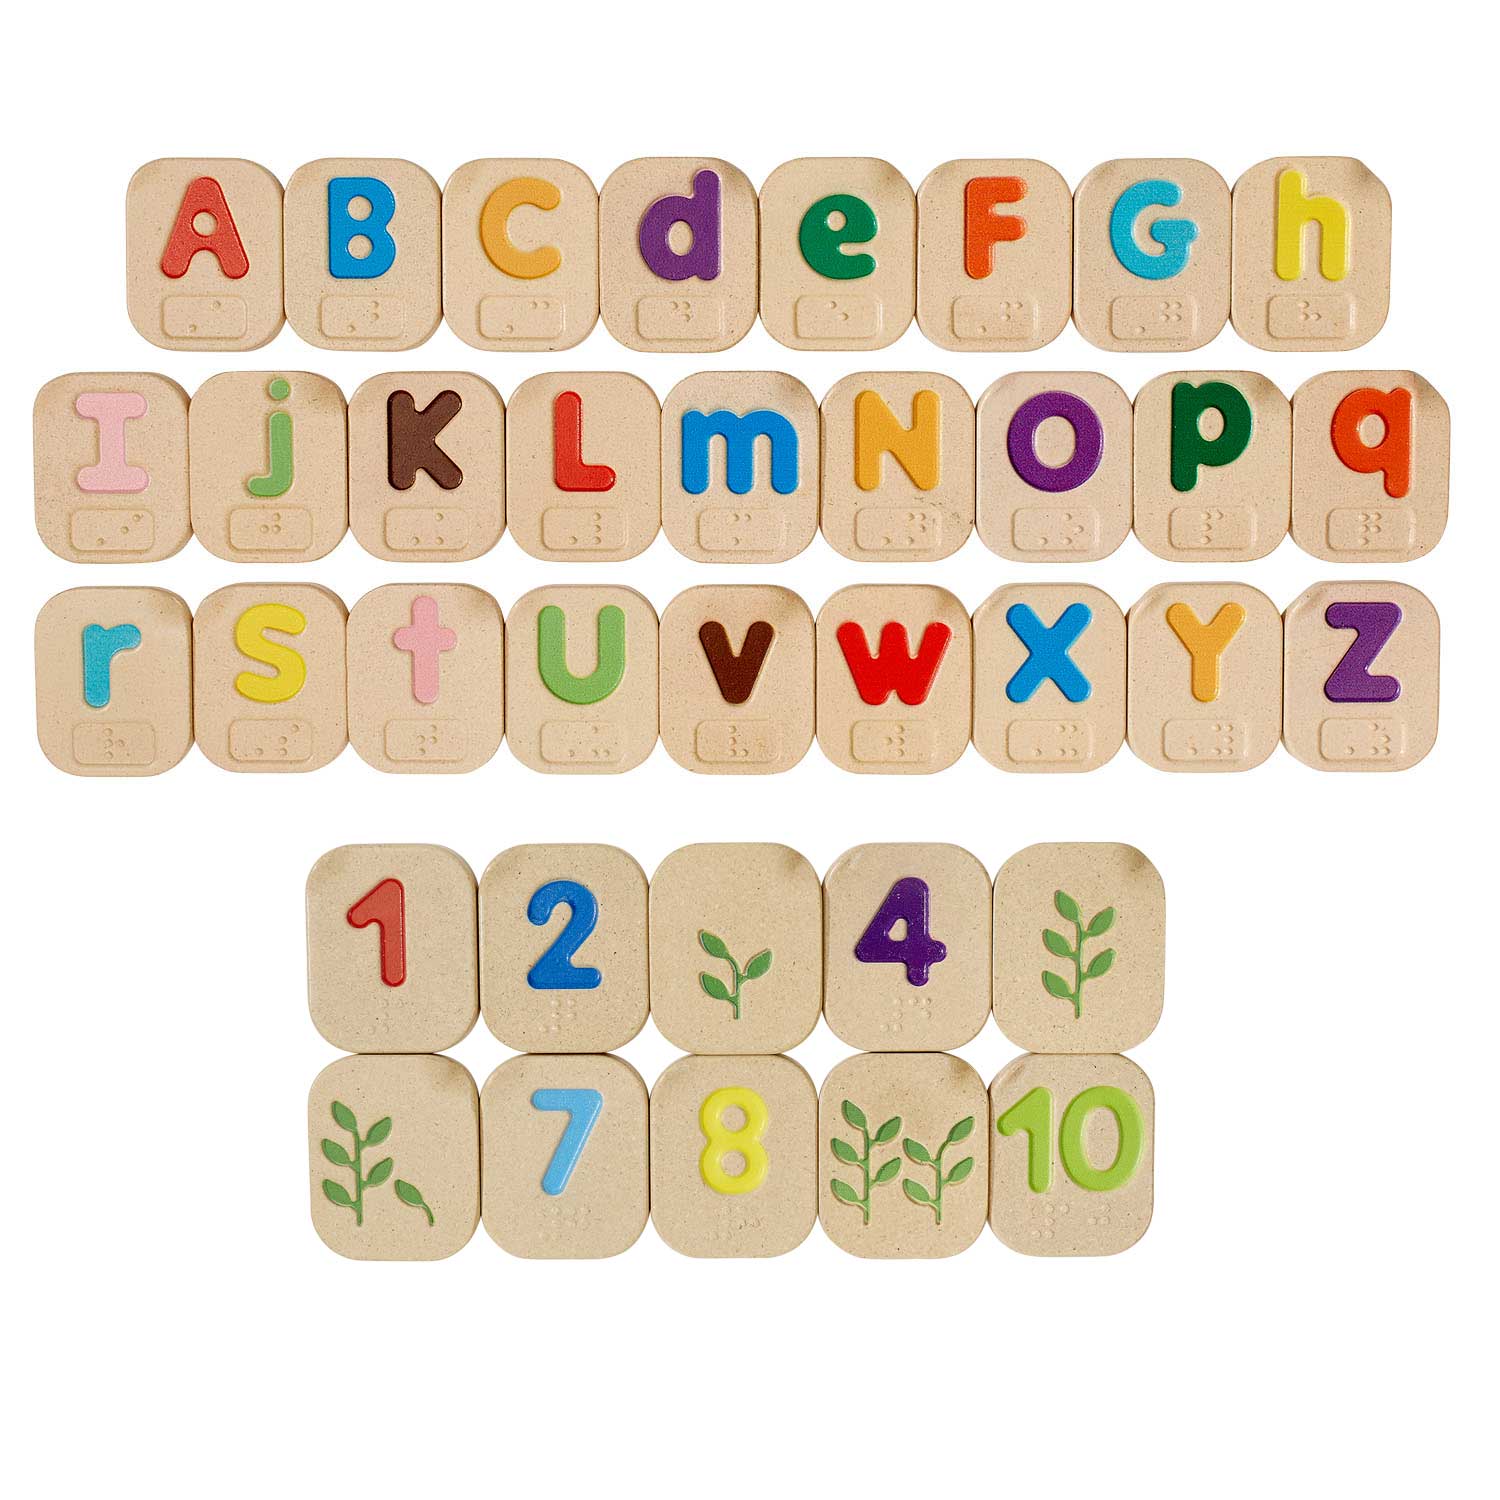 Braille Alphabet & Numbers Set